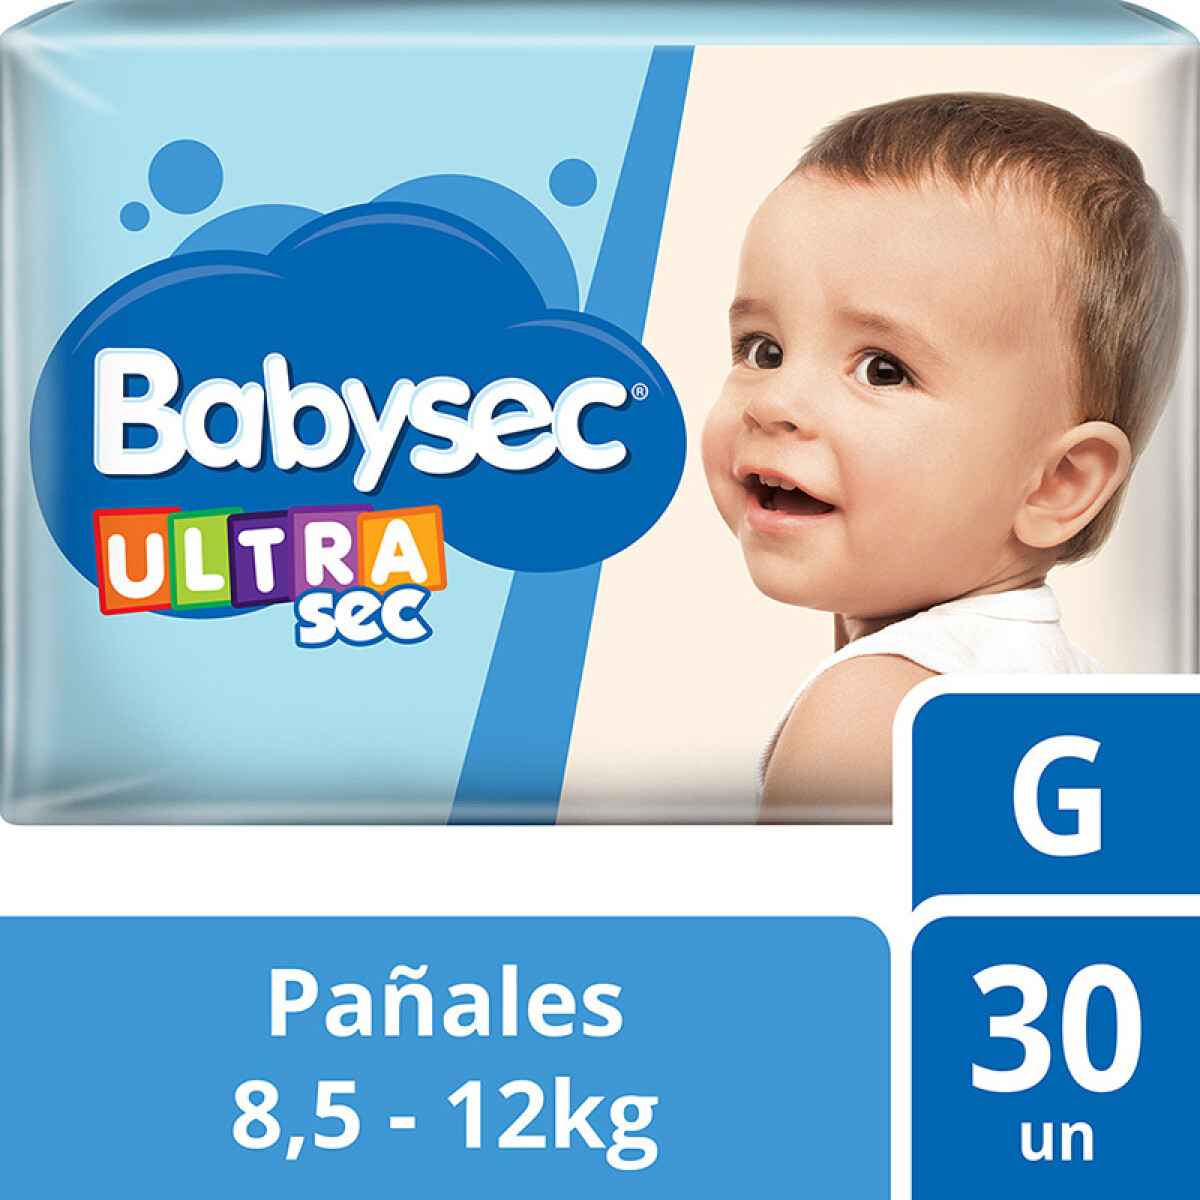 Baby Sec pañales Ultra Sec - Gx30 